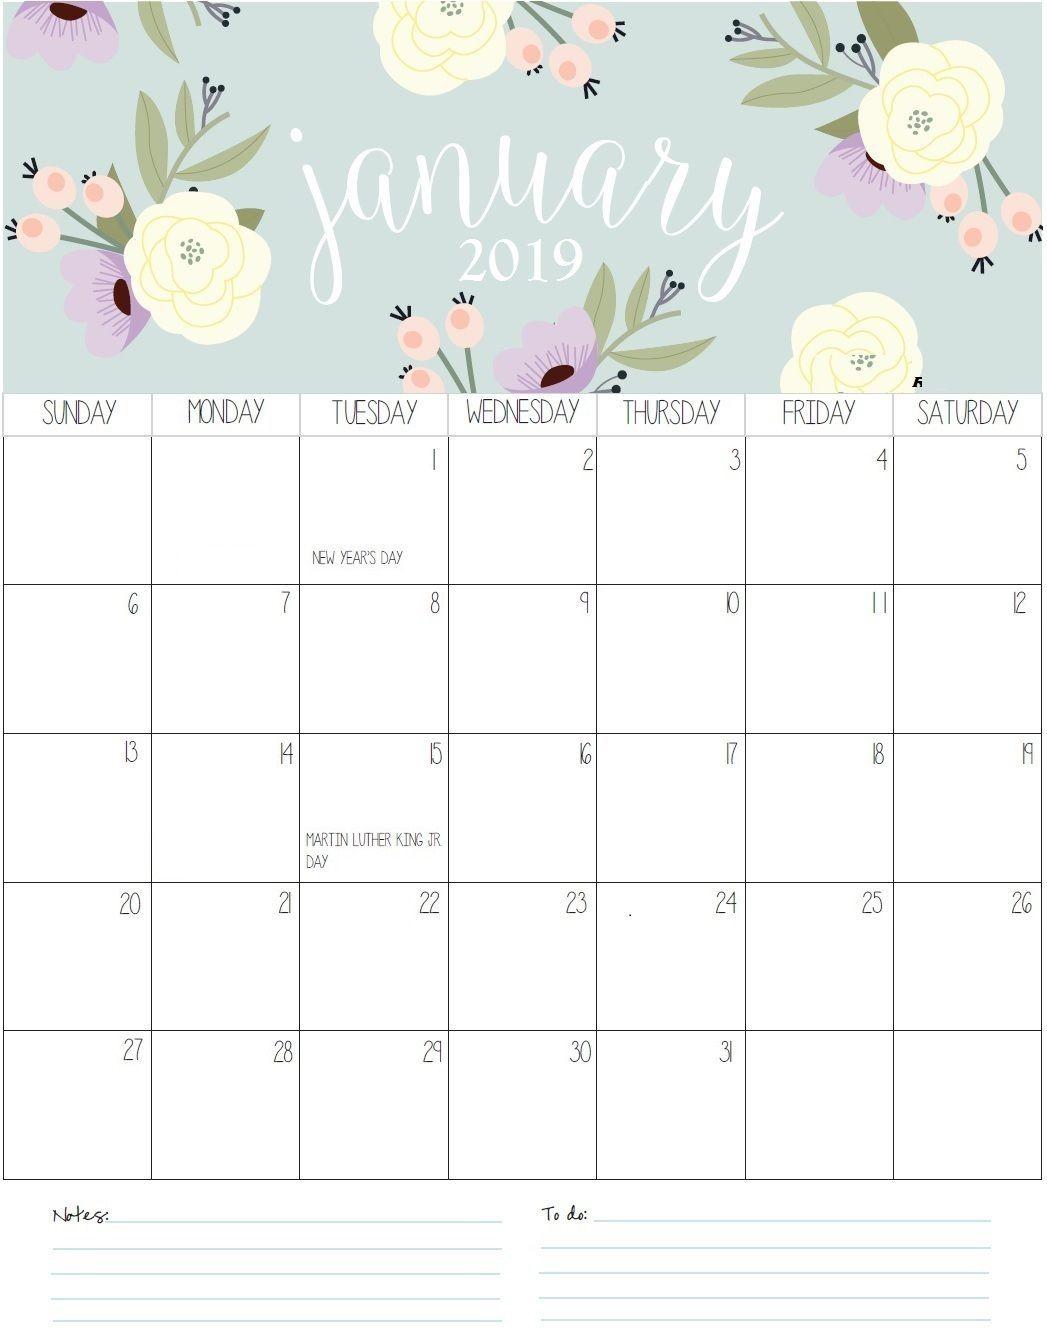 Free January 2019 Calendar Wallpaper. Calendar Format Example